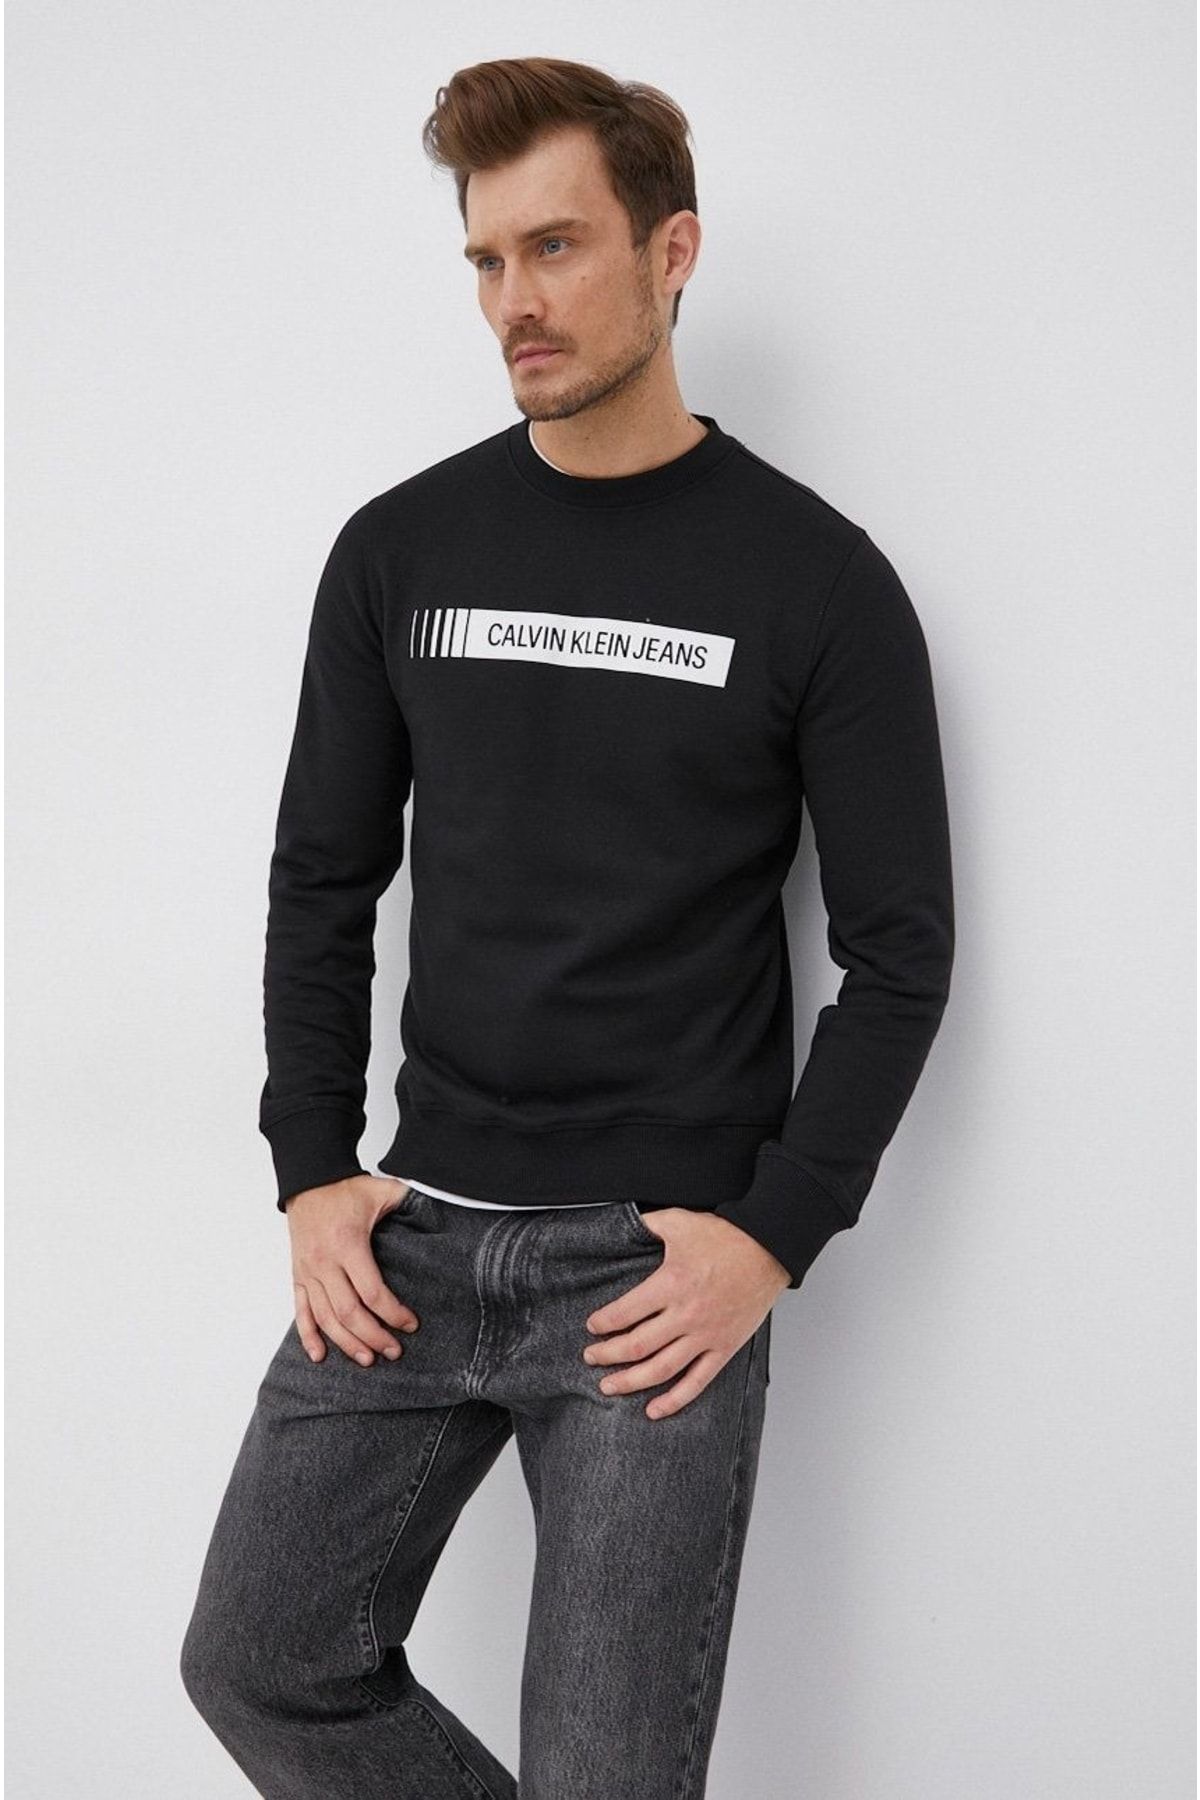 Calvin Klein Jeans Follow The Brand Institutional Logo Sweatshirt